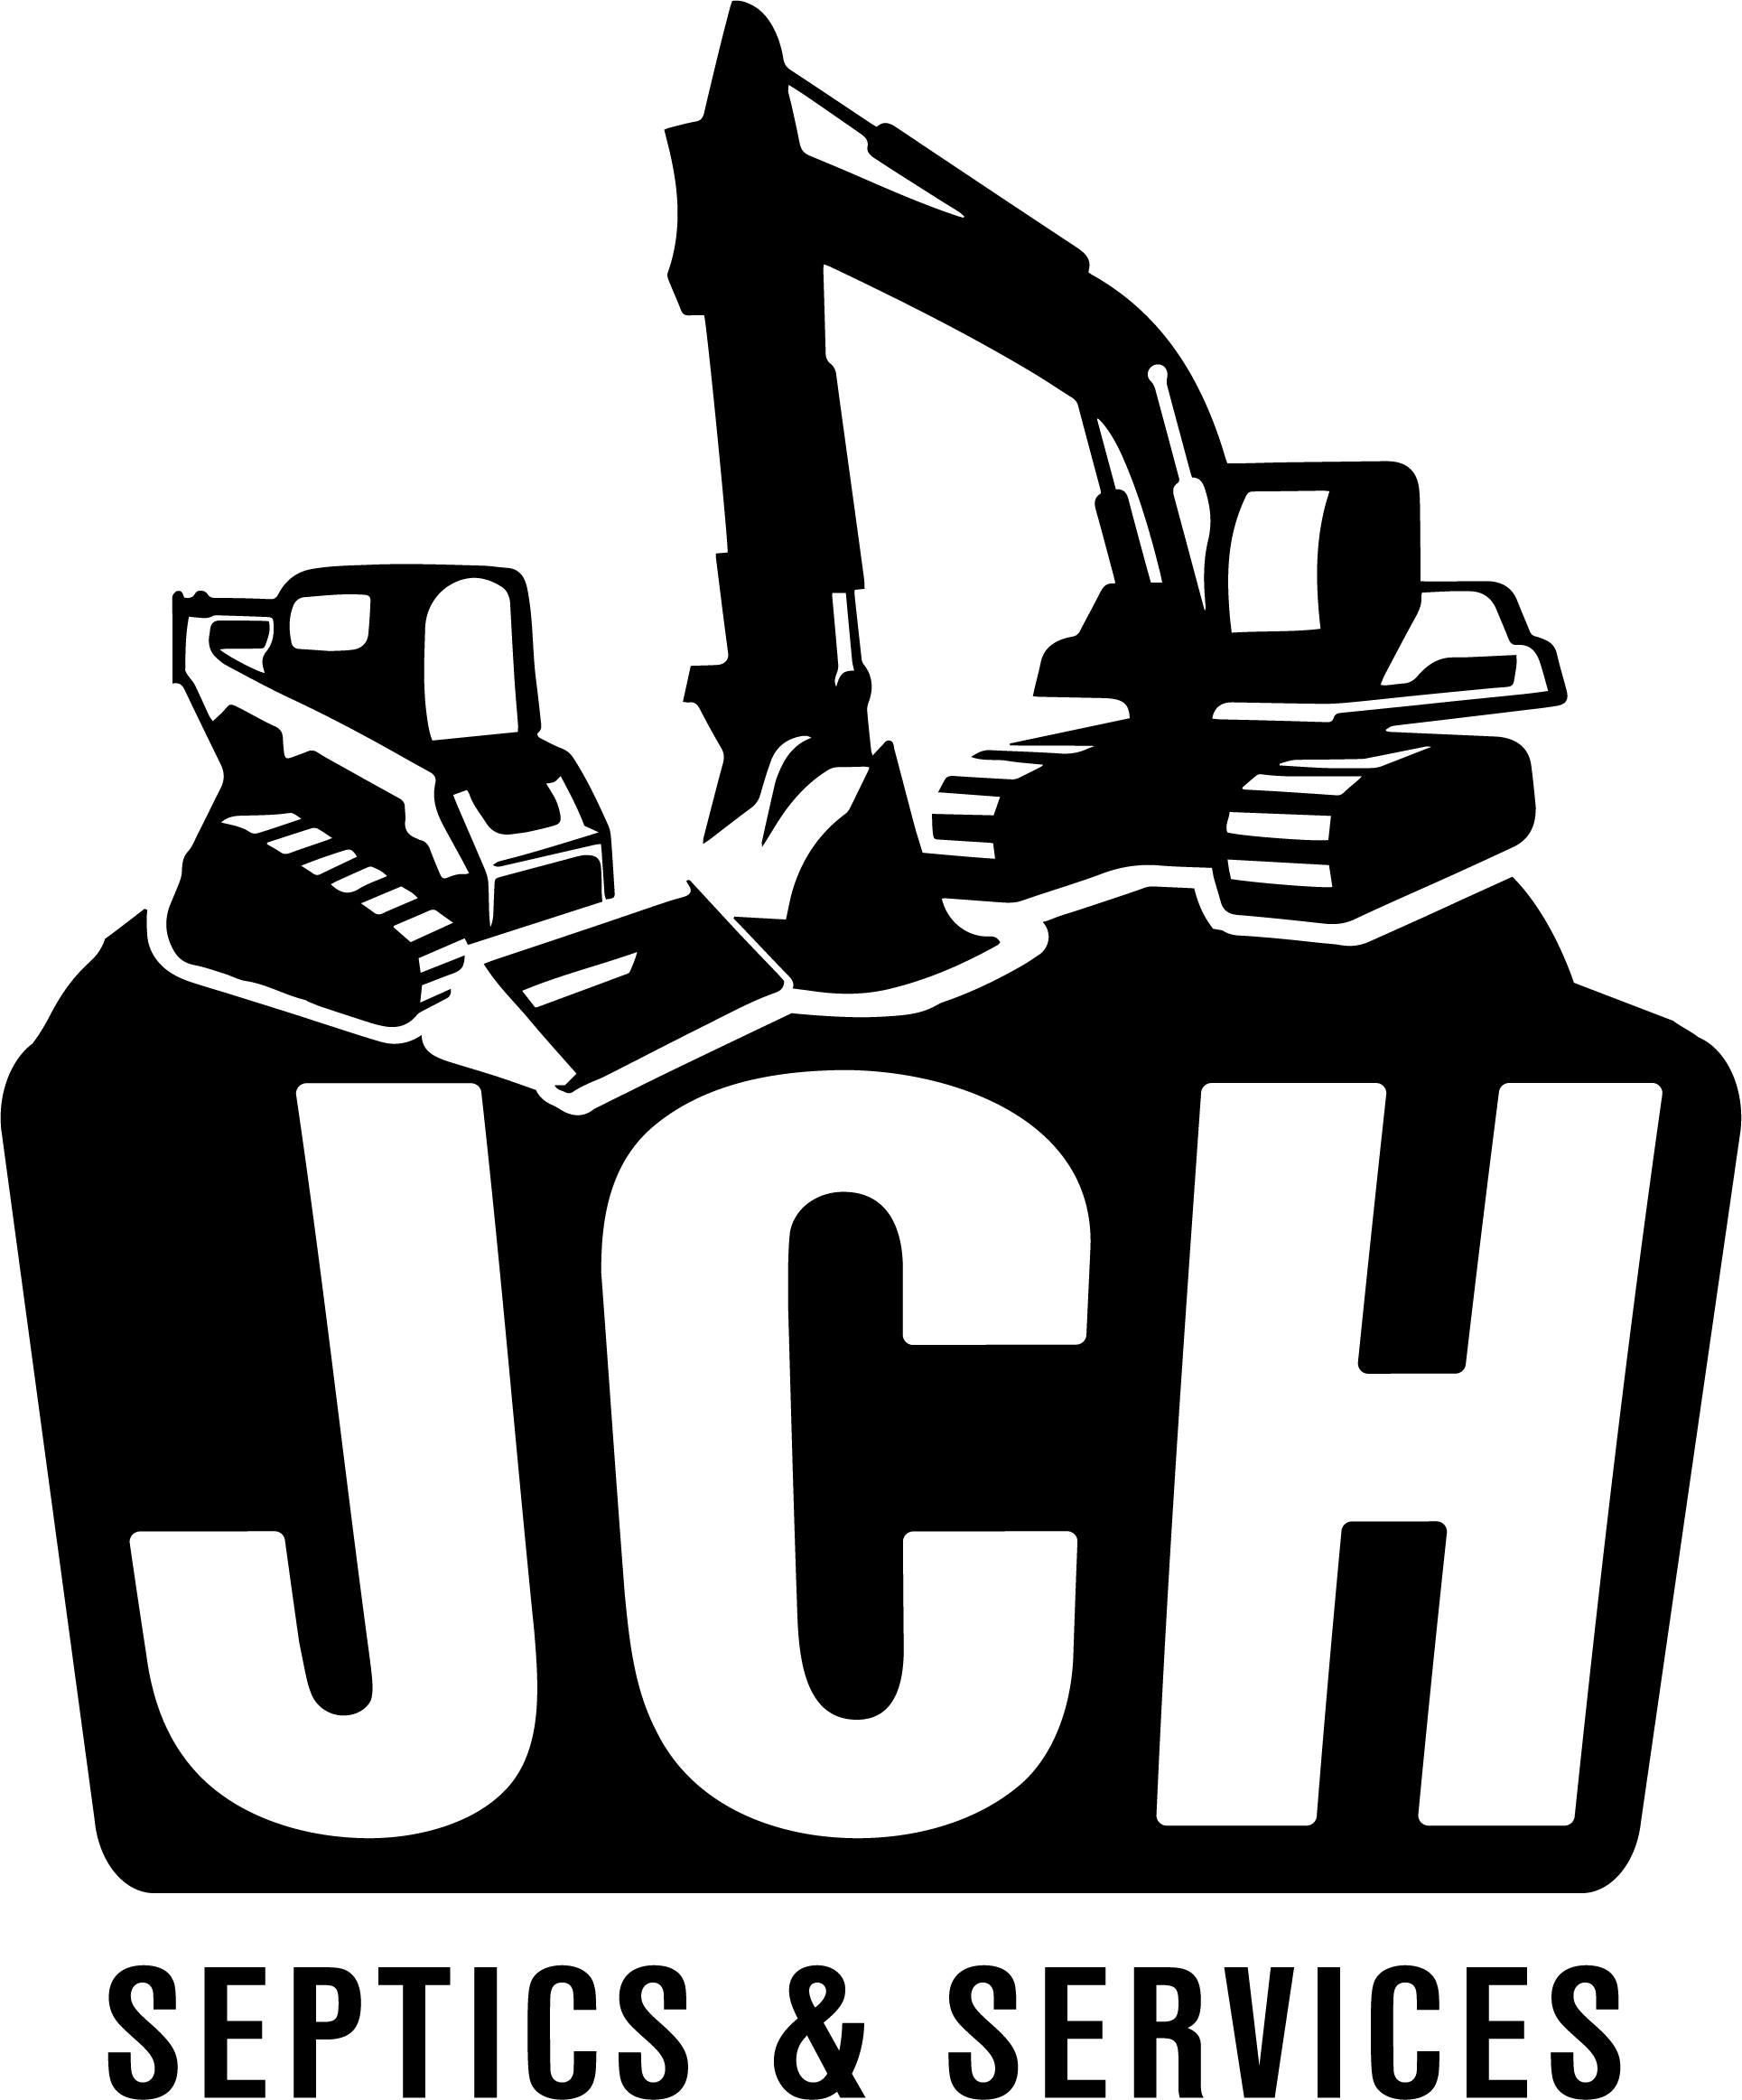 JCH Services